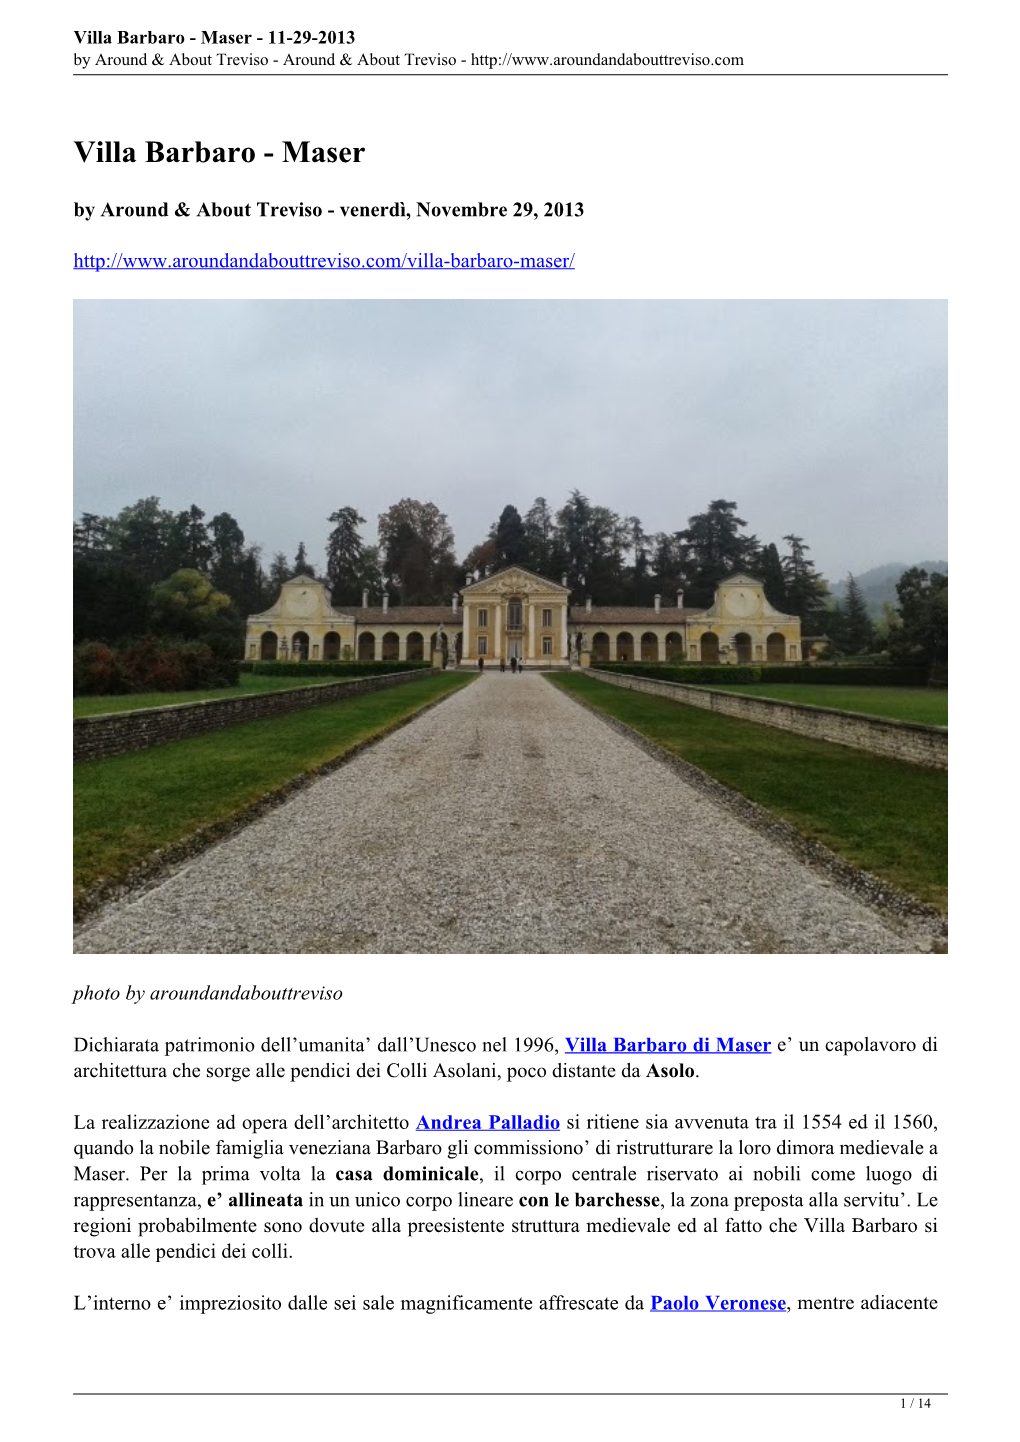 Villa Barbaro - Maser - 11-29-2013 by Around & About Treviso - Around & About Treviso